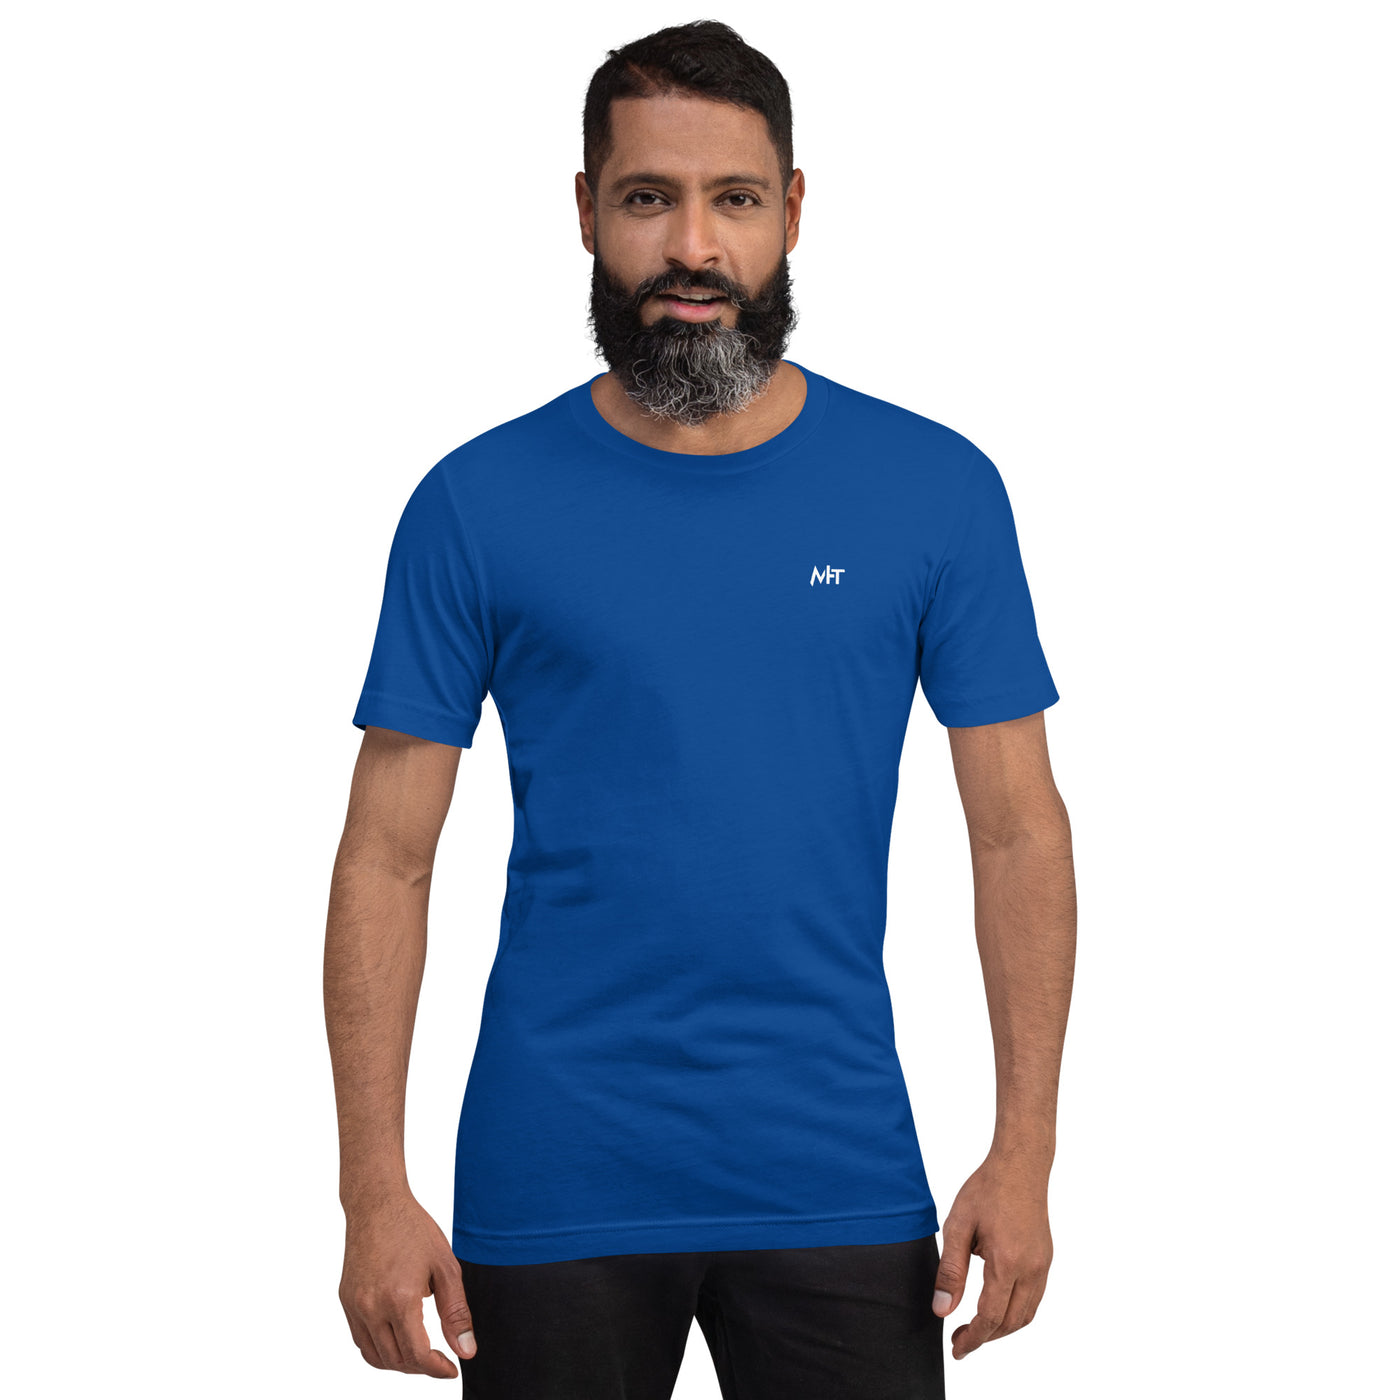 BITCOIN CLUB t-shirt design maker featuring 8-bit style Unisex t-shirt ( Back Print )